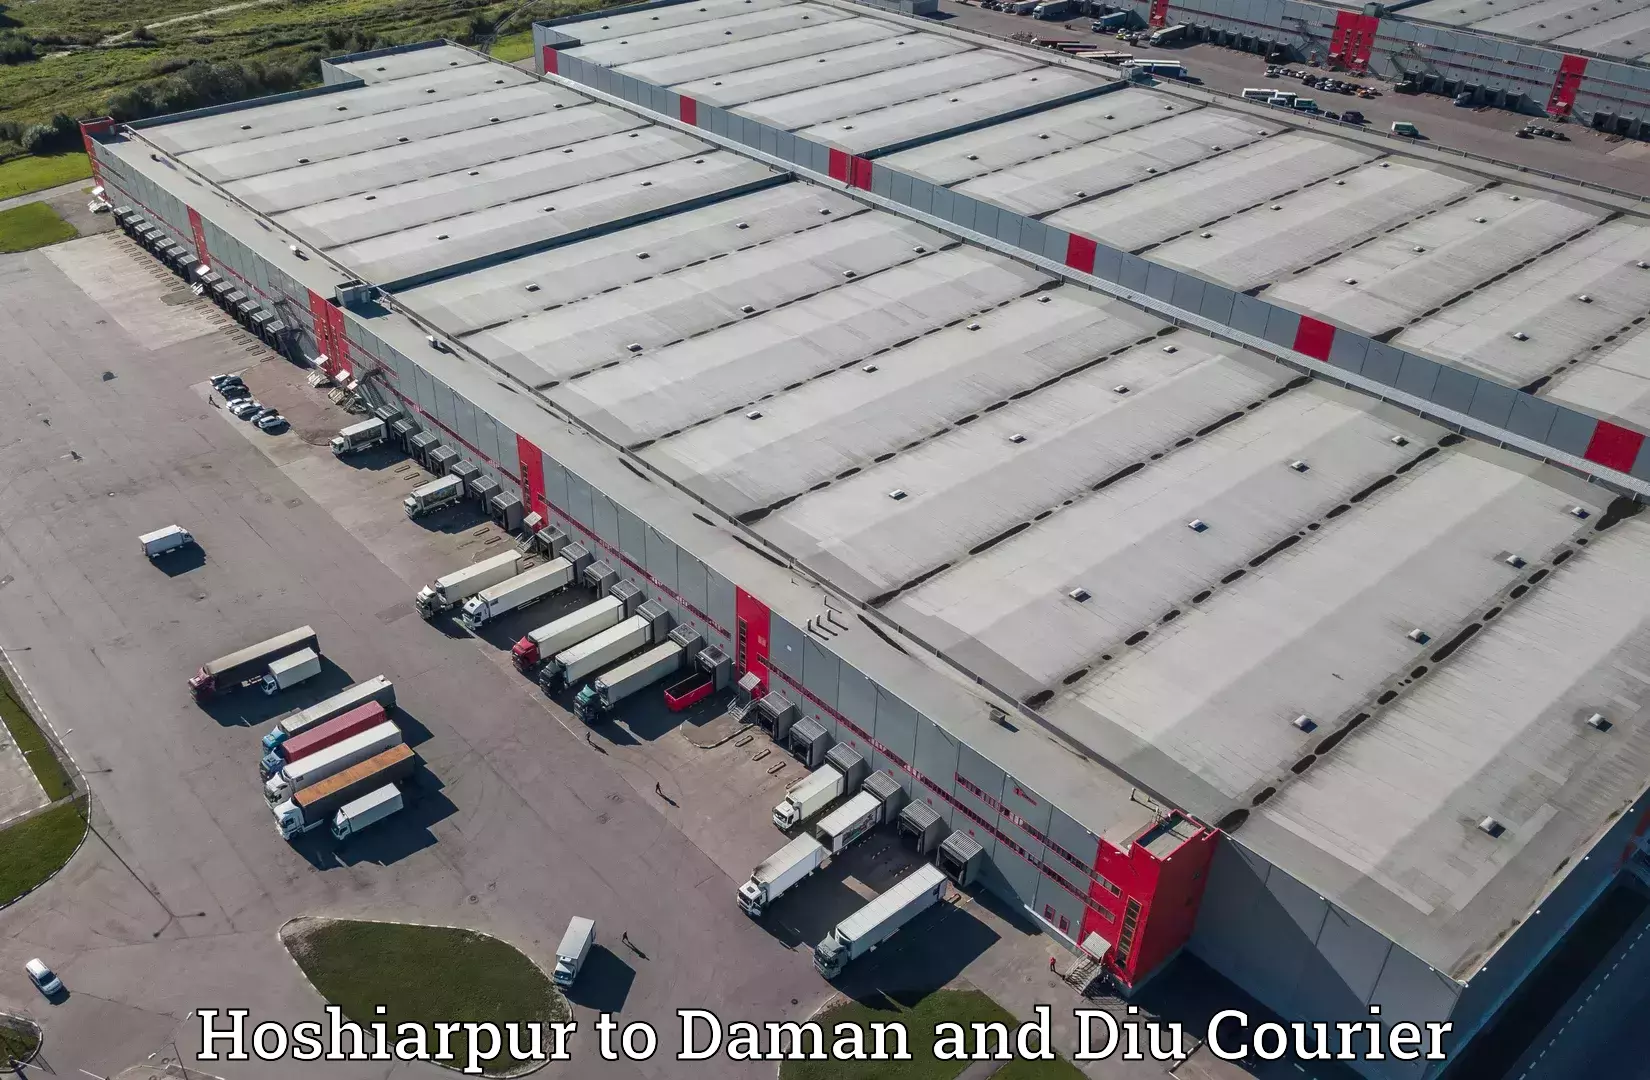 Courier service partnerships Hoshiarpur to Daman and Diu